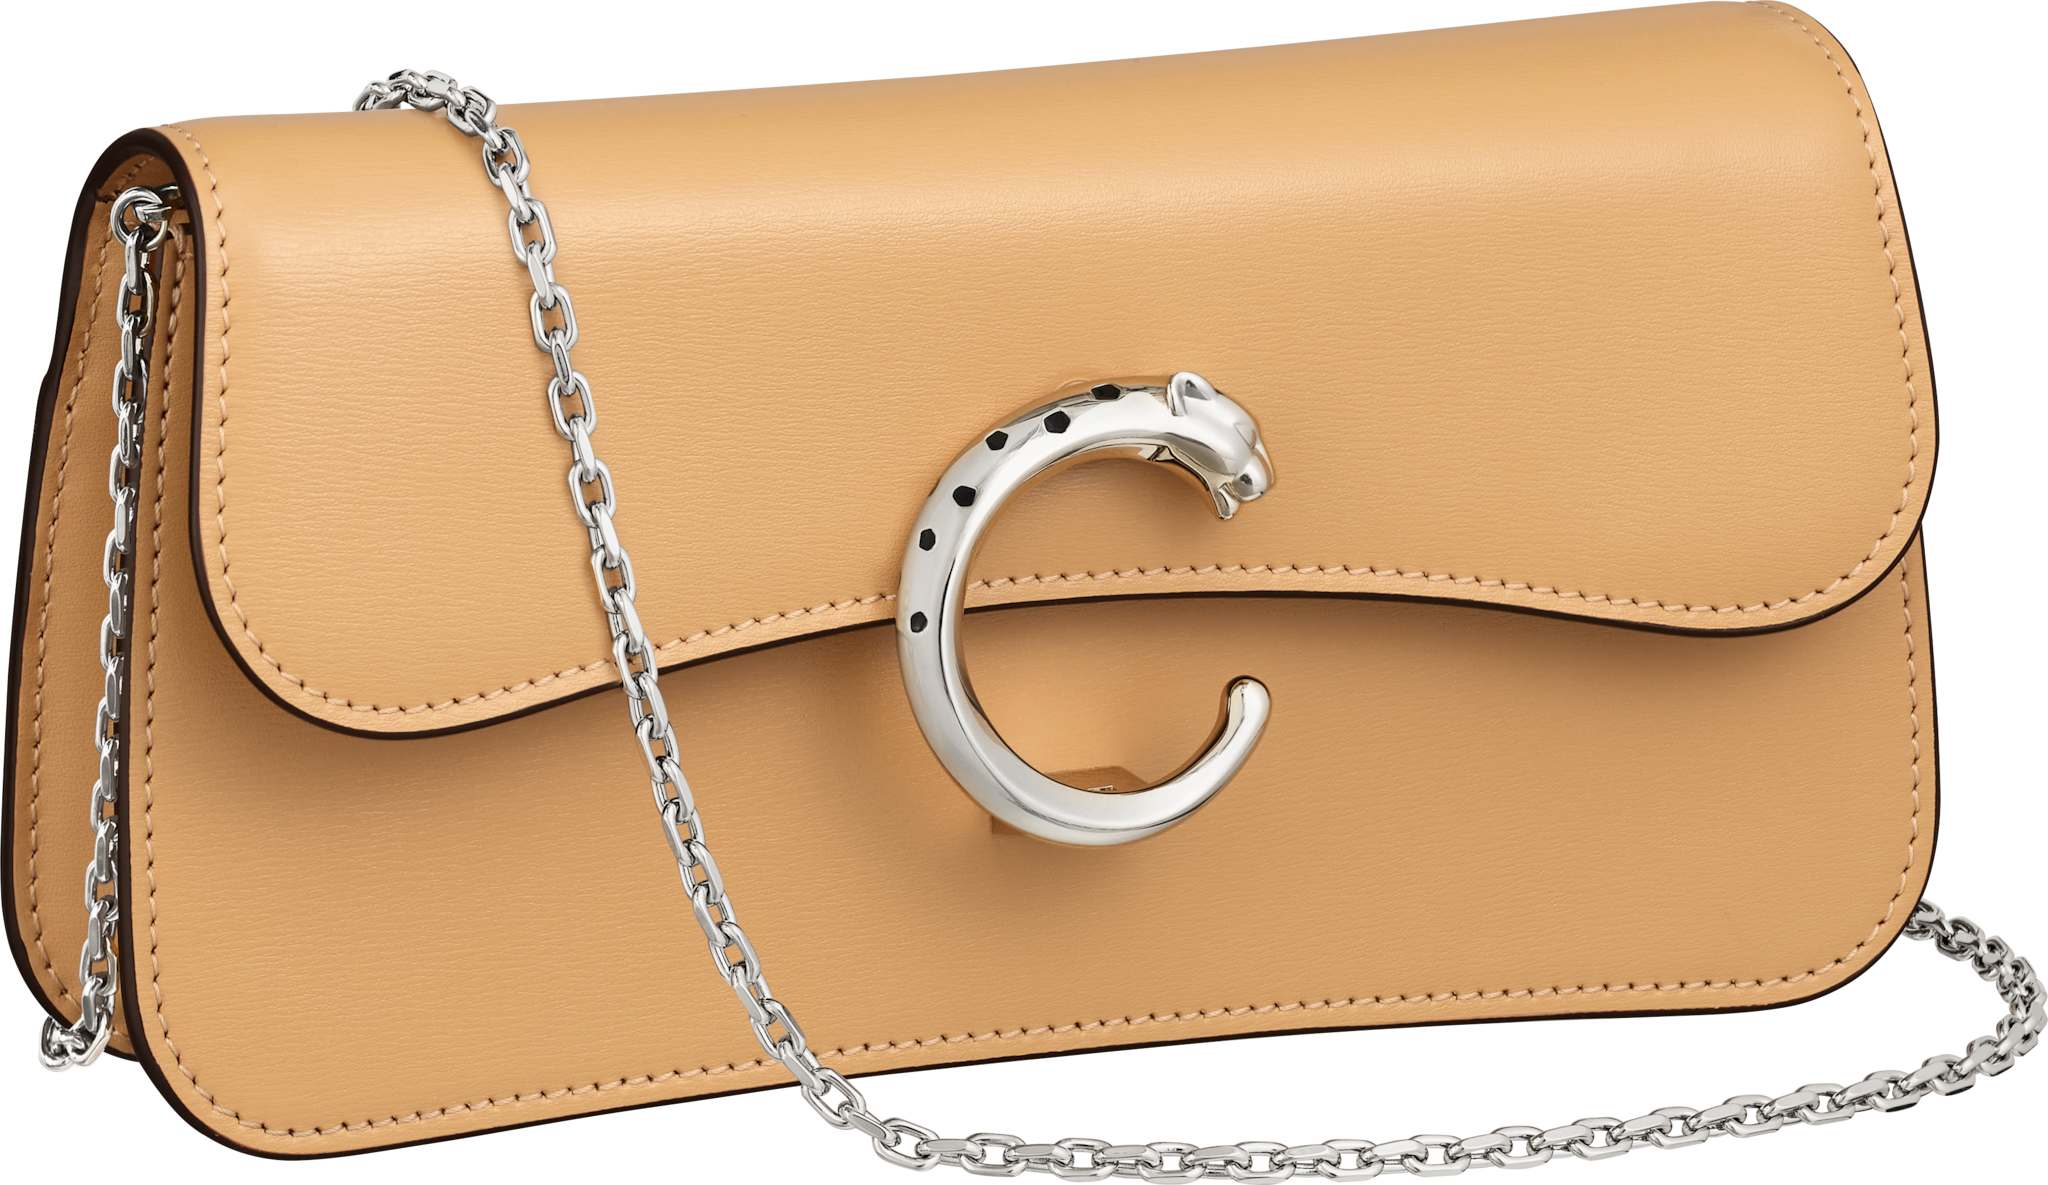 Chain bag mini model, Panthère de CartierCamel beige calfskin, palladium finish